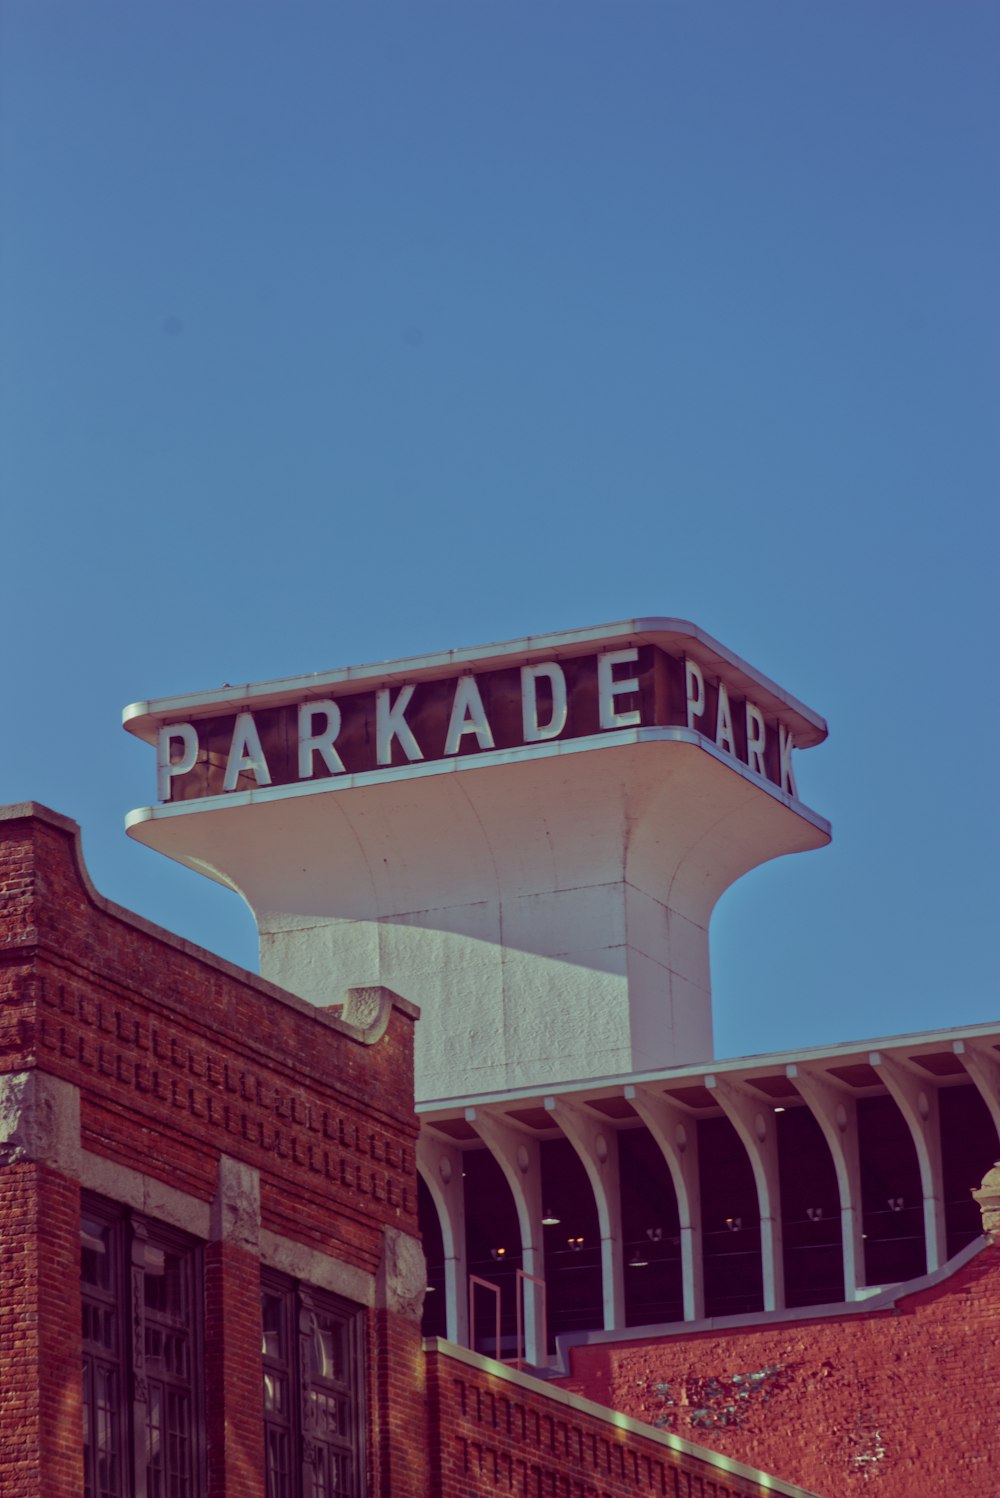 Parkade Park라는 표지판이 있는 벽돌 건물